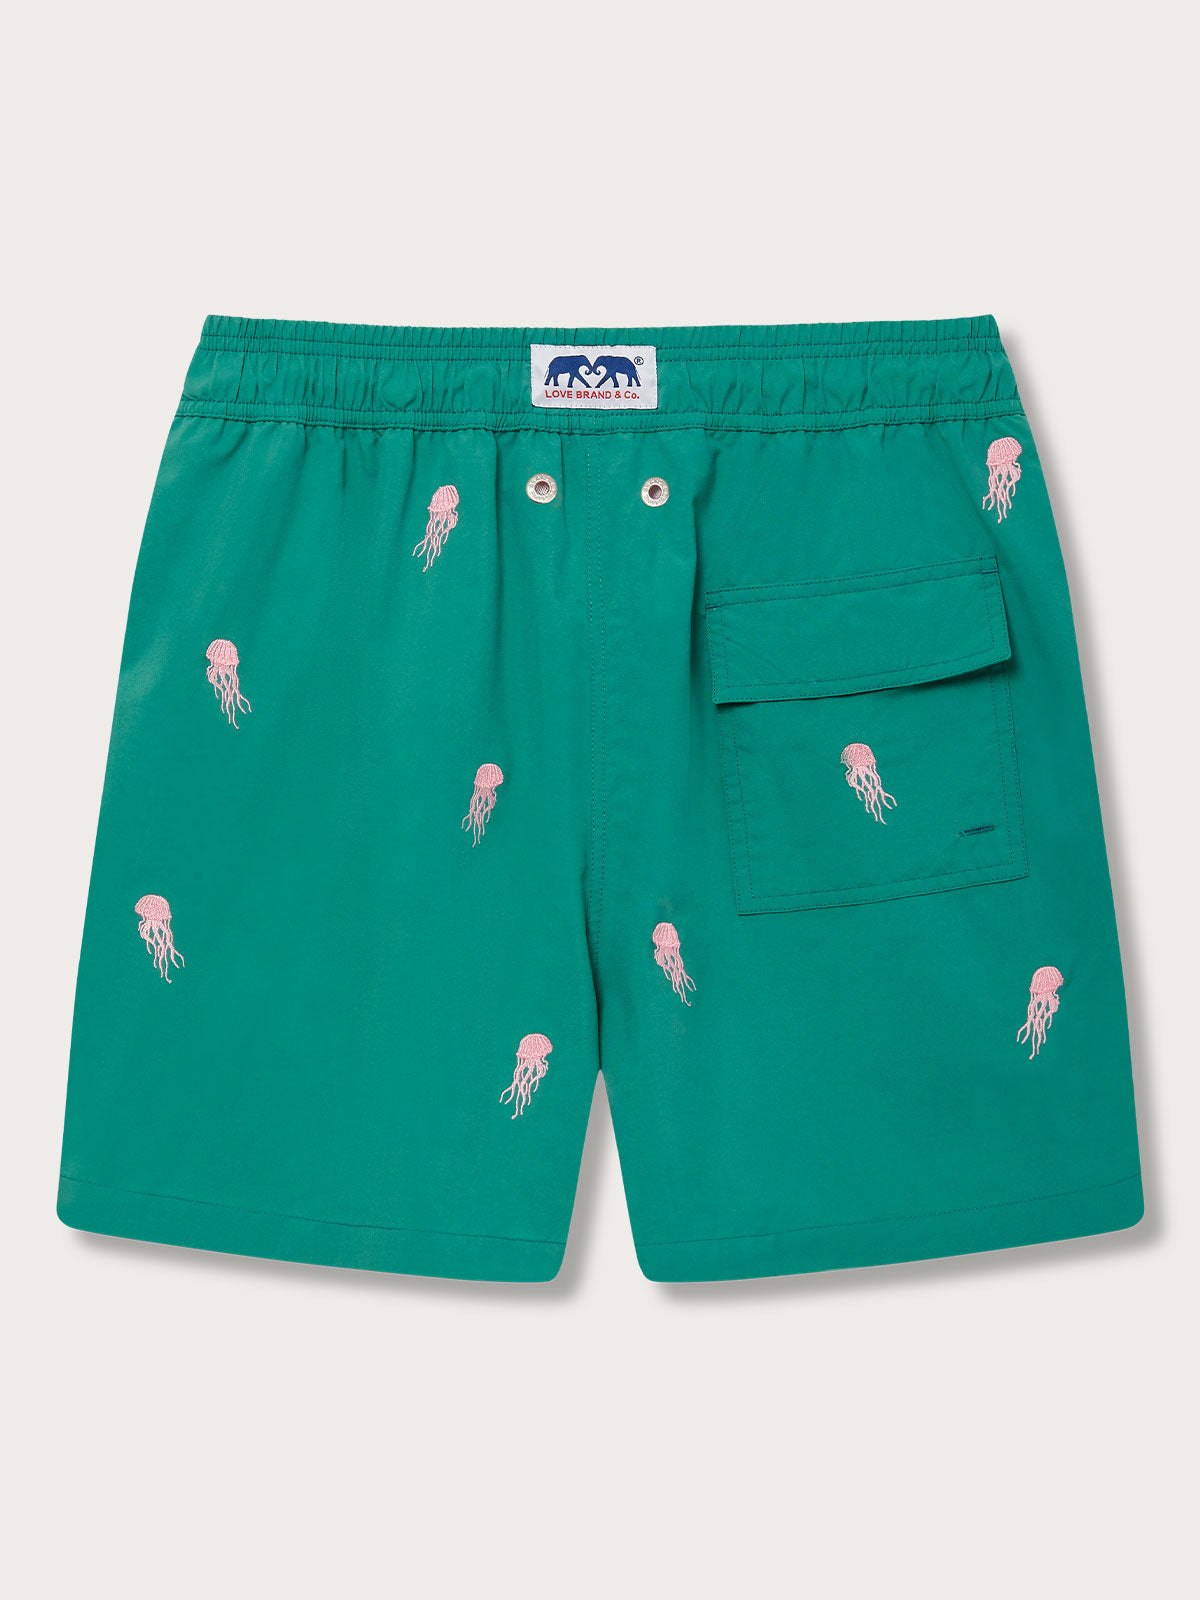 Men's Smack Attack Embroidered Staniel Swim Shorts